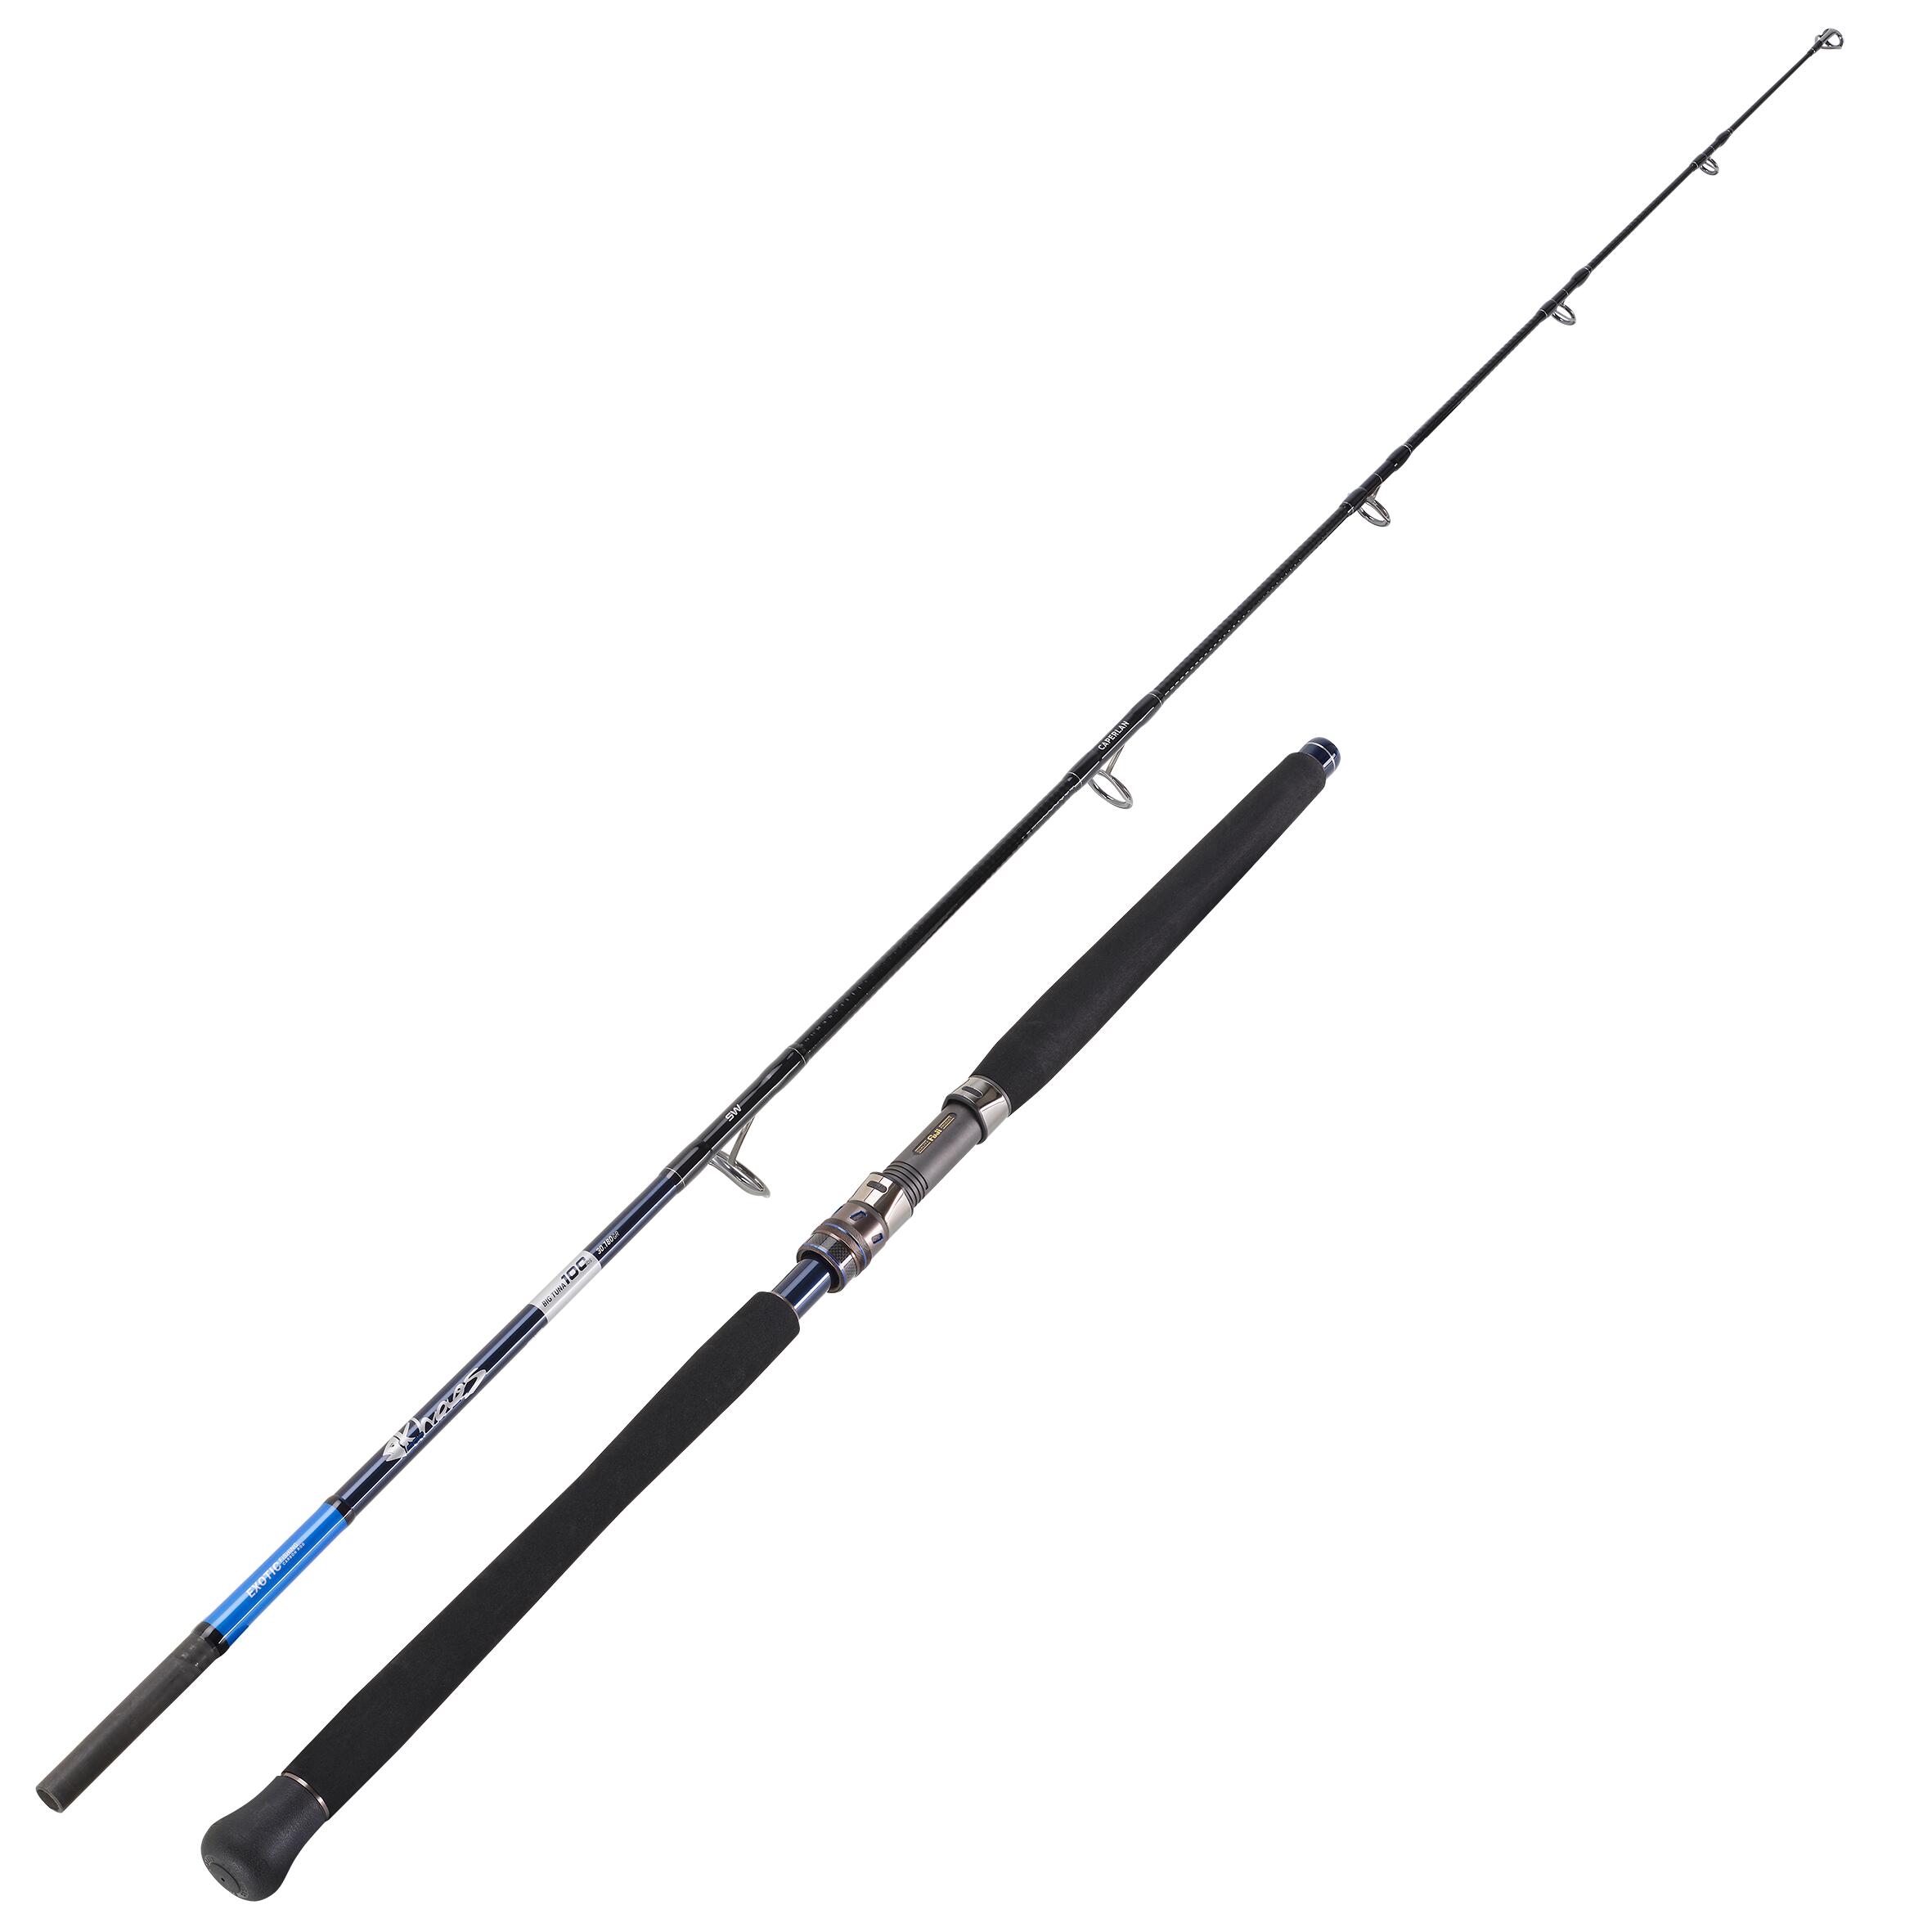 Saltwater lure fishing rods